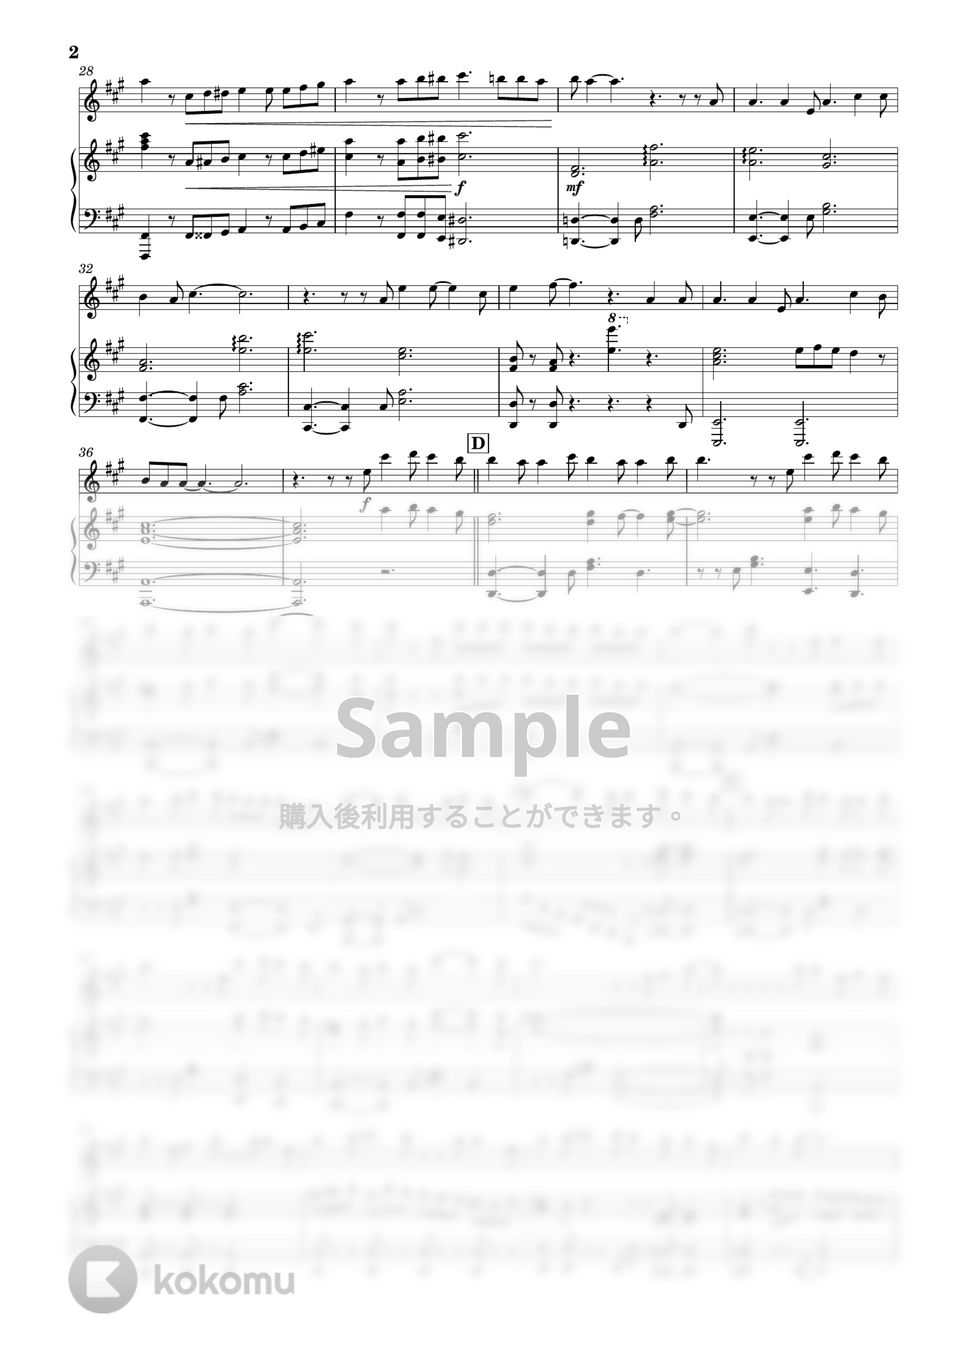 Official髭男dism - Subtitle (フルート&ピアノ伴奏 / Aメジャーver.) by PiaFlu